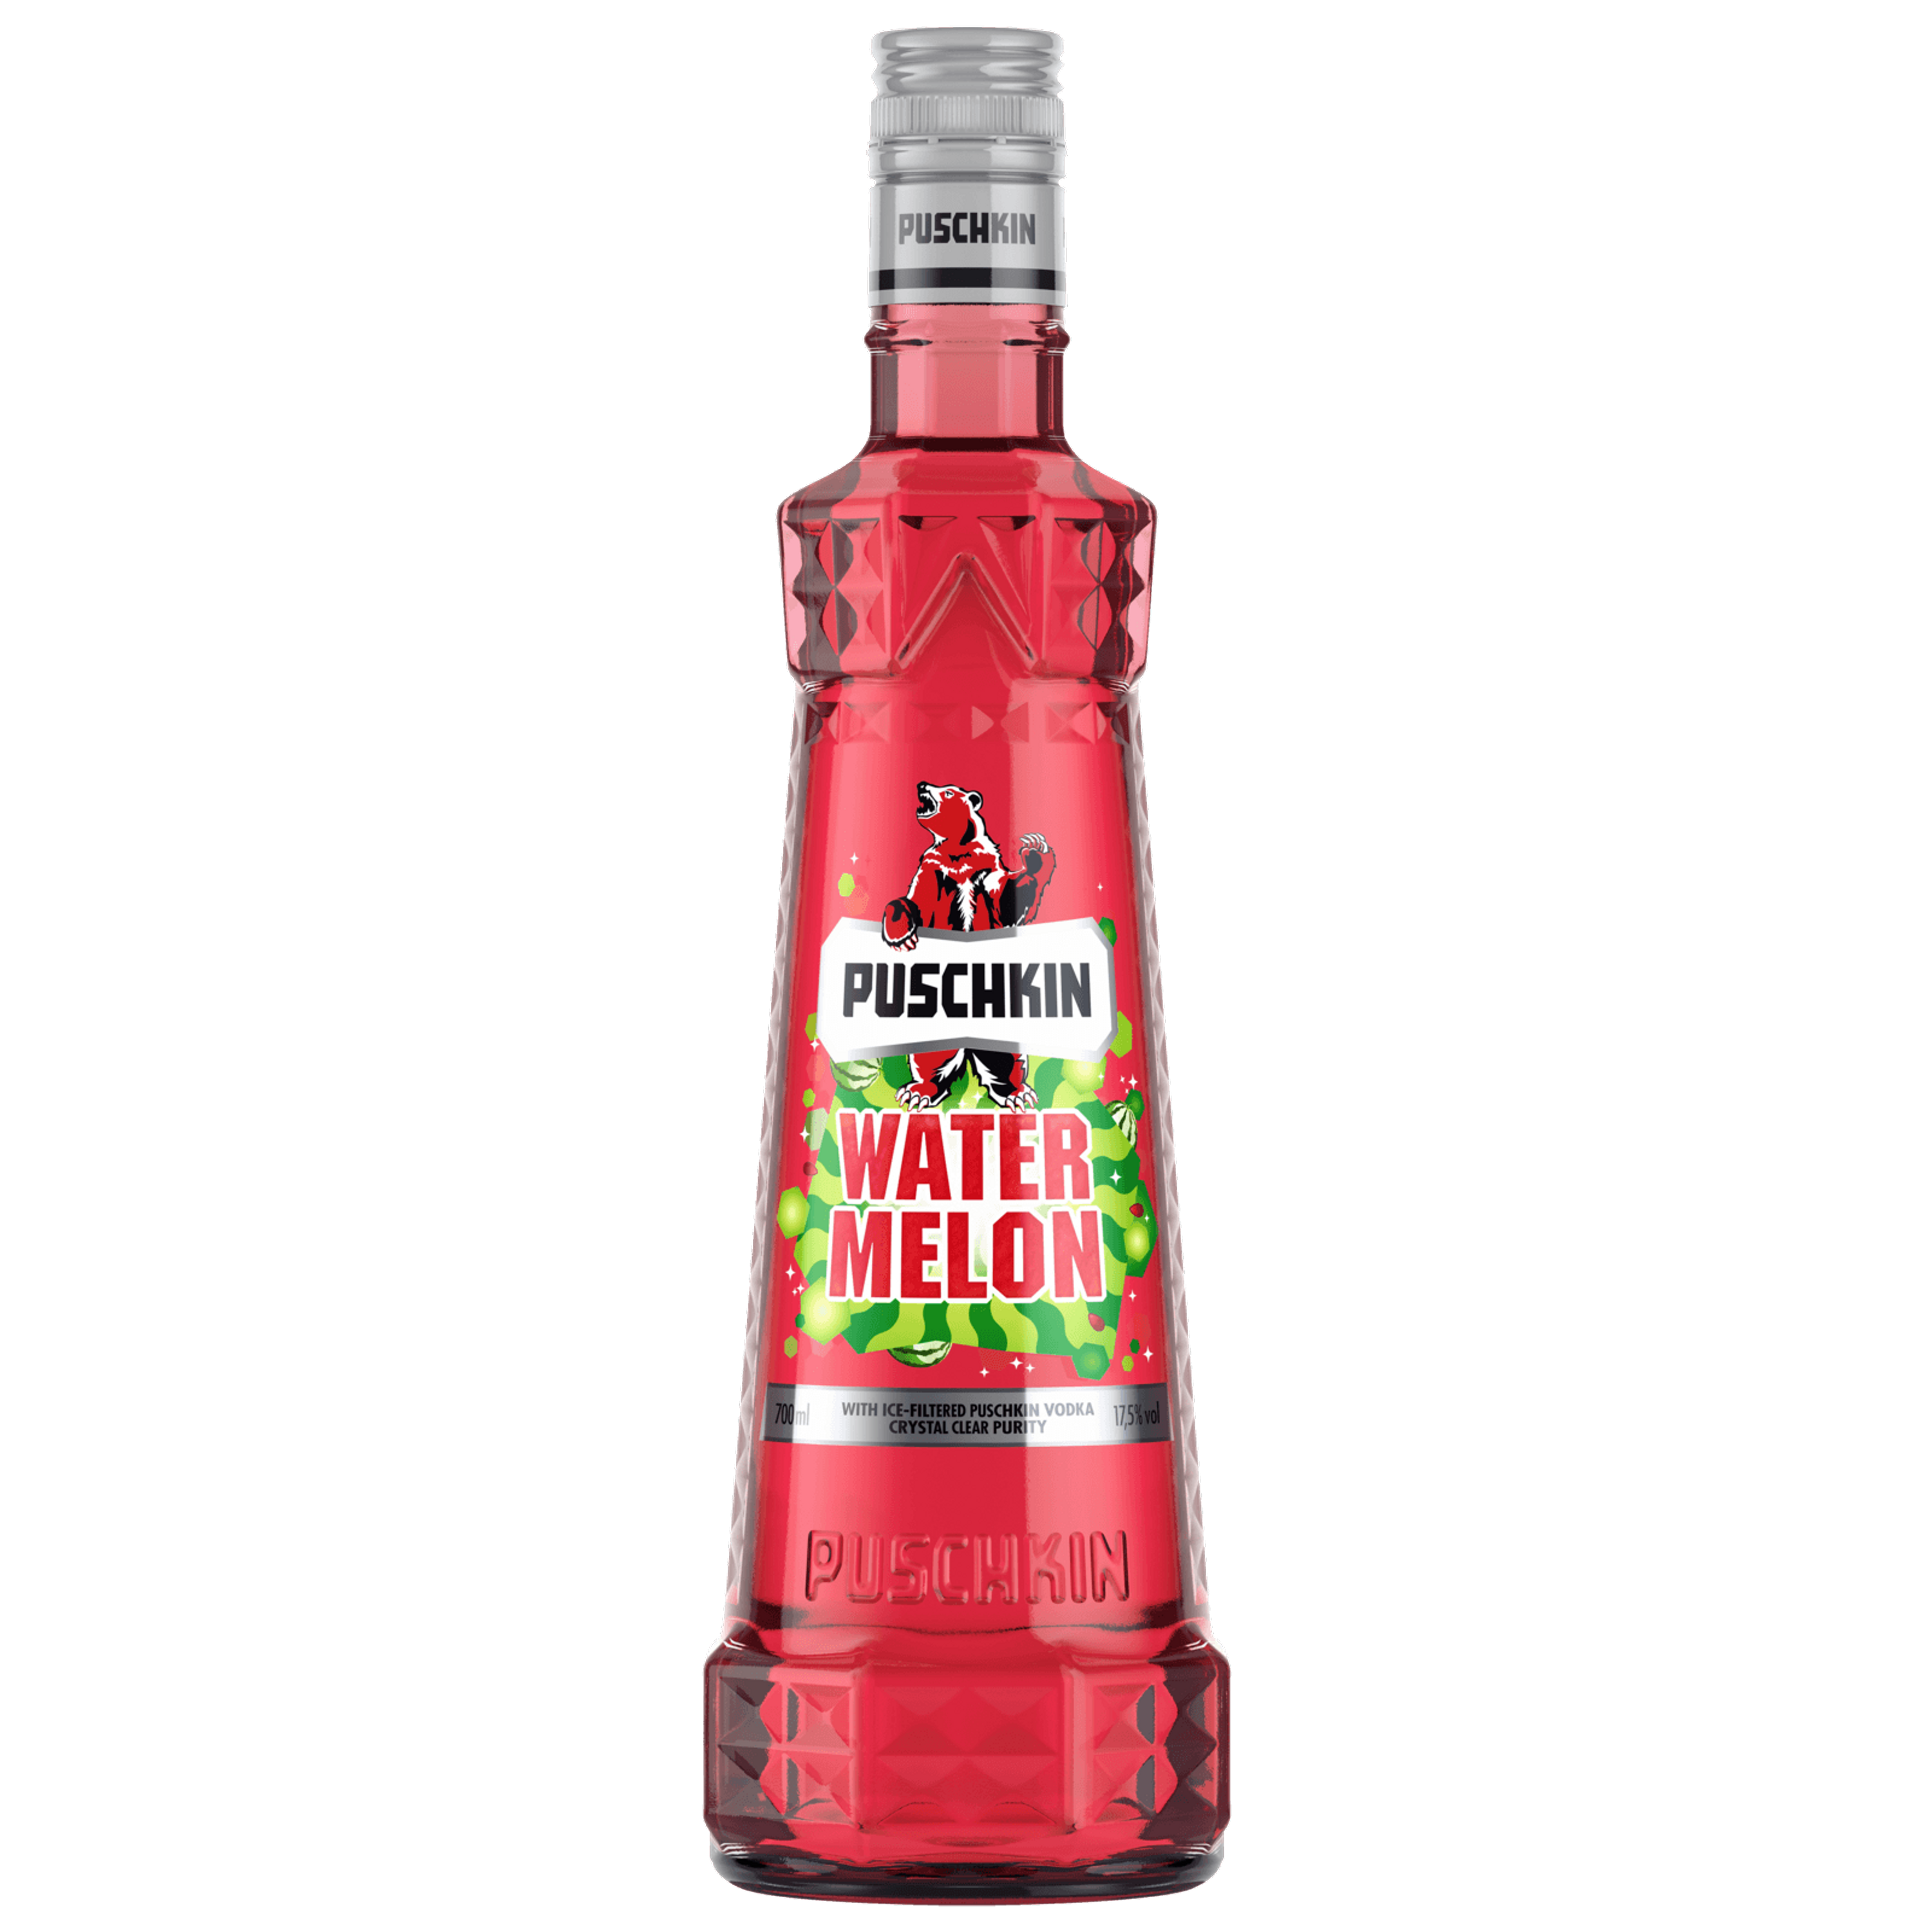 Puschkin Watermelon 0.7l, alc. 17.5% by volume, vodka Germany 